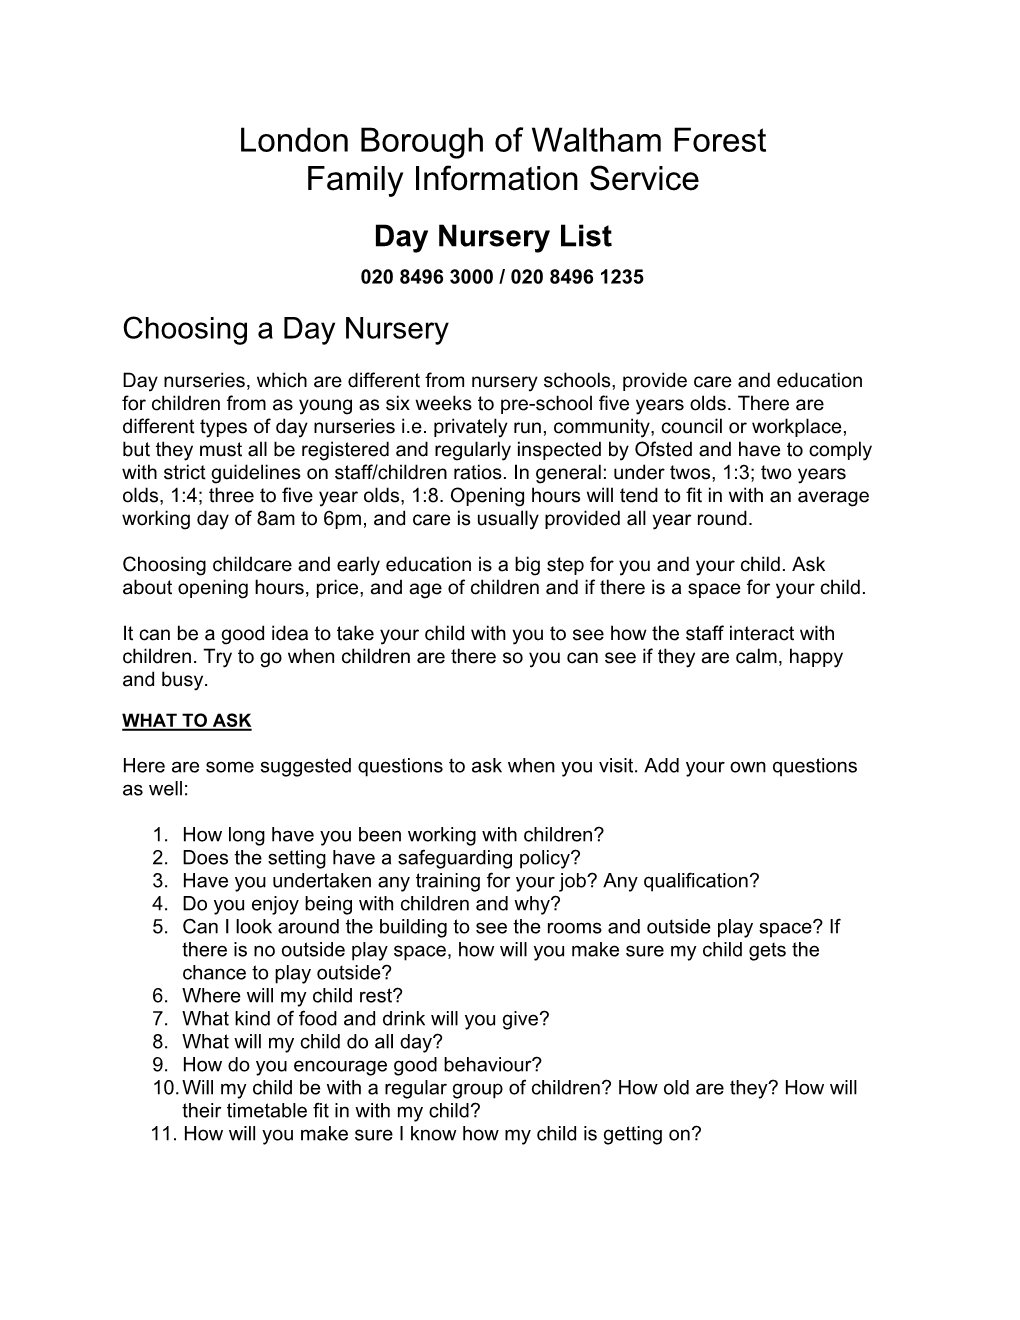 London Borough of Waltham Forest Family Information Service Day Nursery List 020 8496 3000 / 020 8496 1235 Choosing a Day Nursery